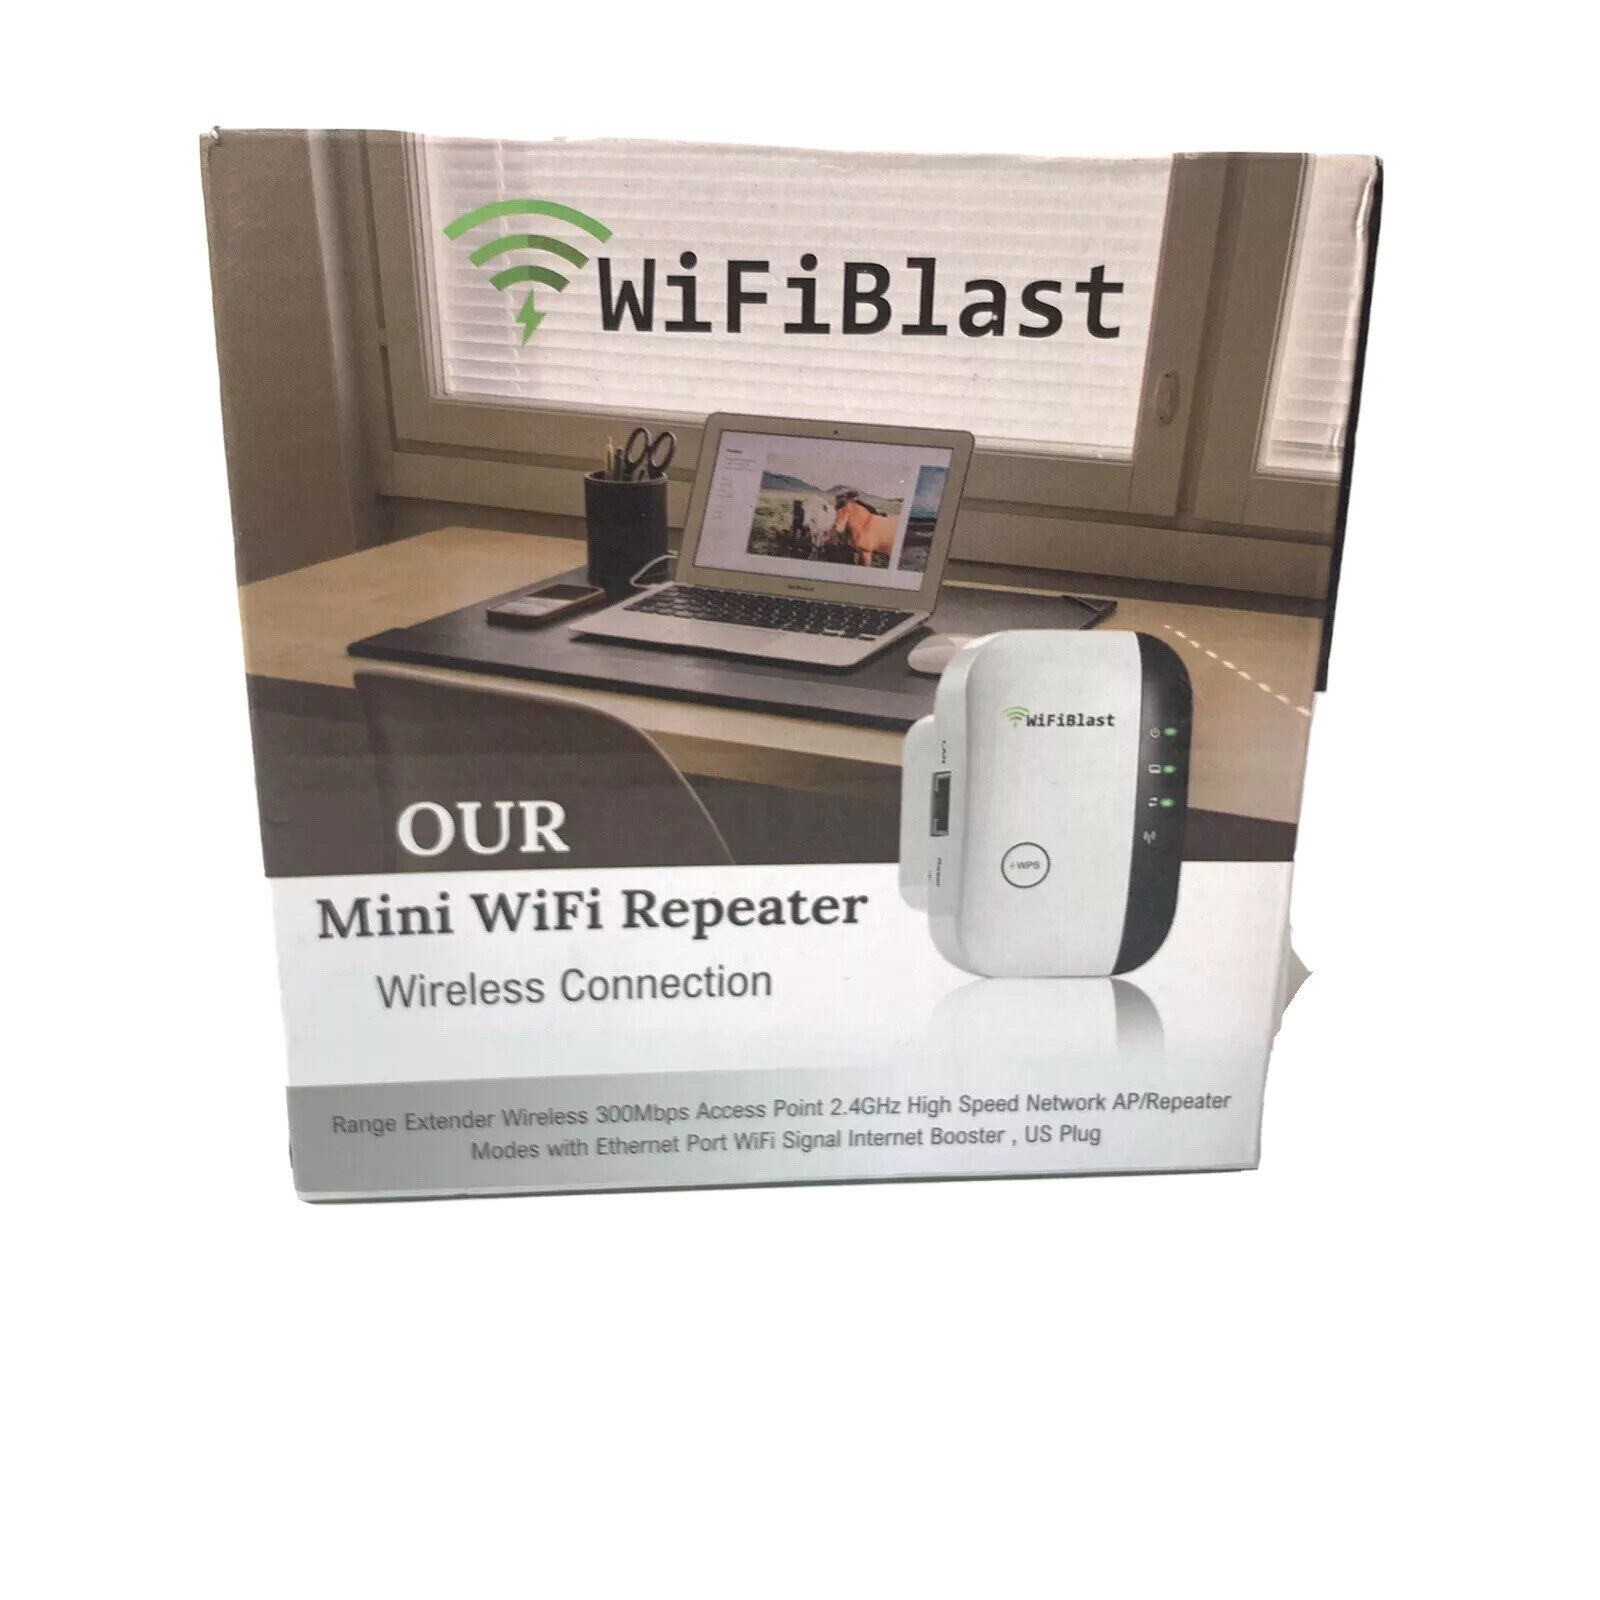 Wi-Fi Blast - Mini WiFi Repeater Wireless Connection